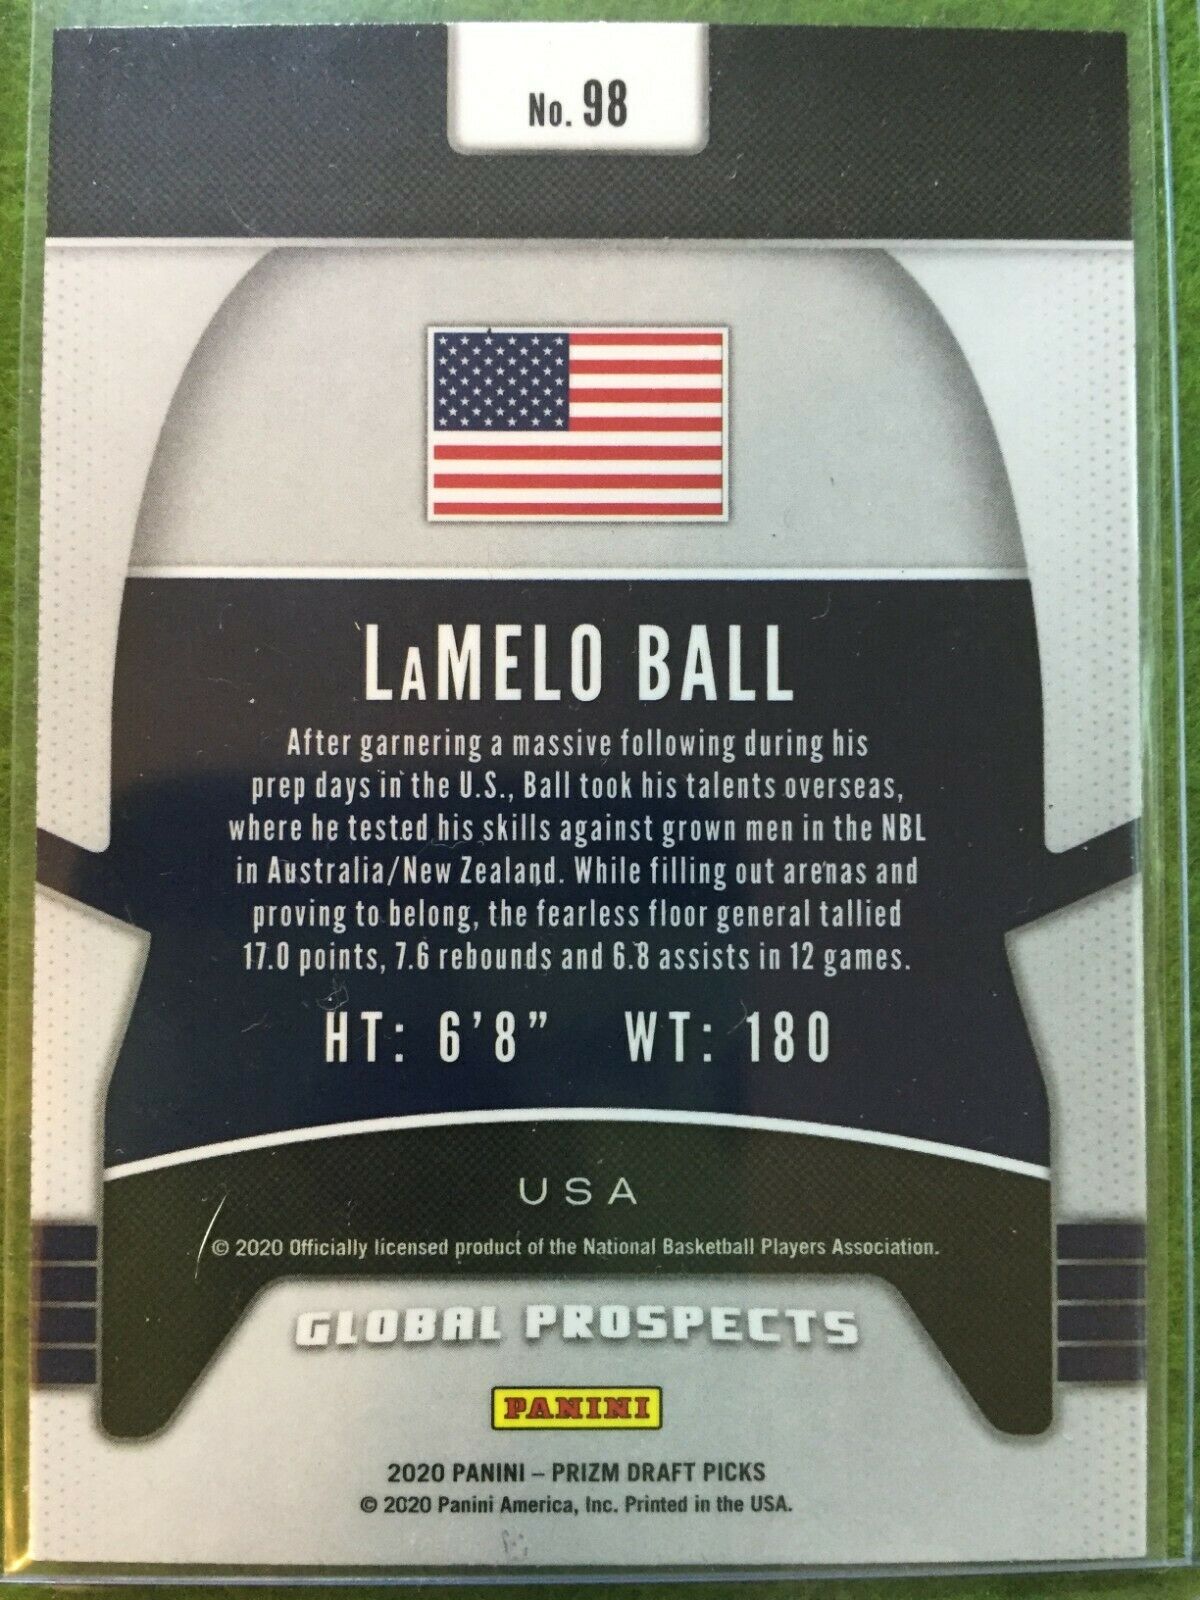 LAMELO BALL PRIZM ROOKIE CARD JERSEY #1 CHARLOTTE HORNETS 2020 Prizm Draft Picks